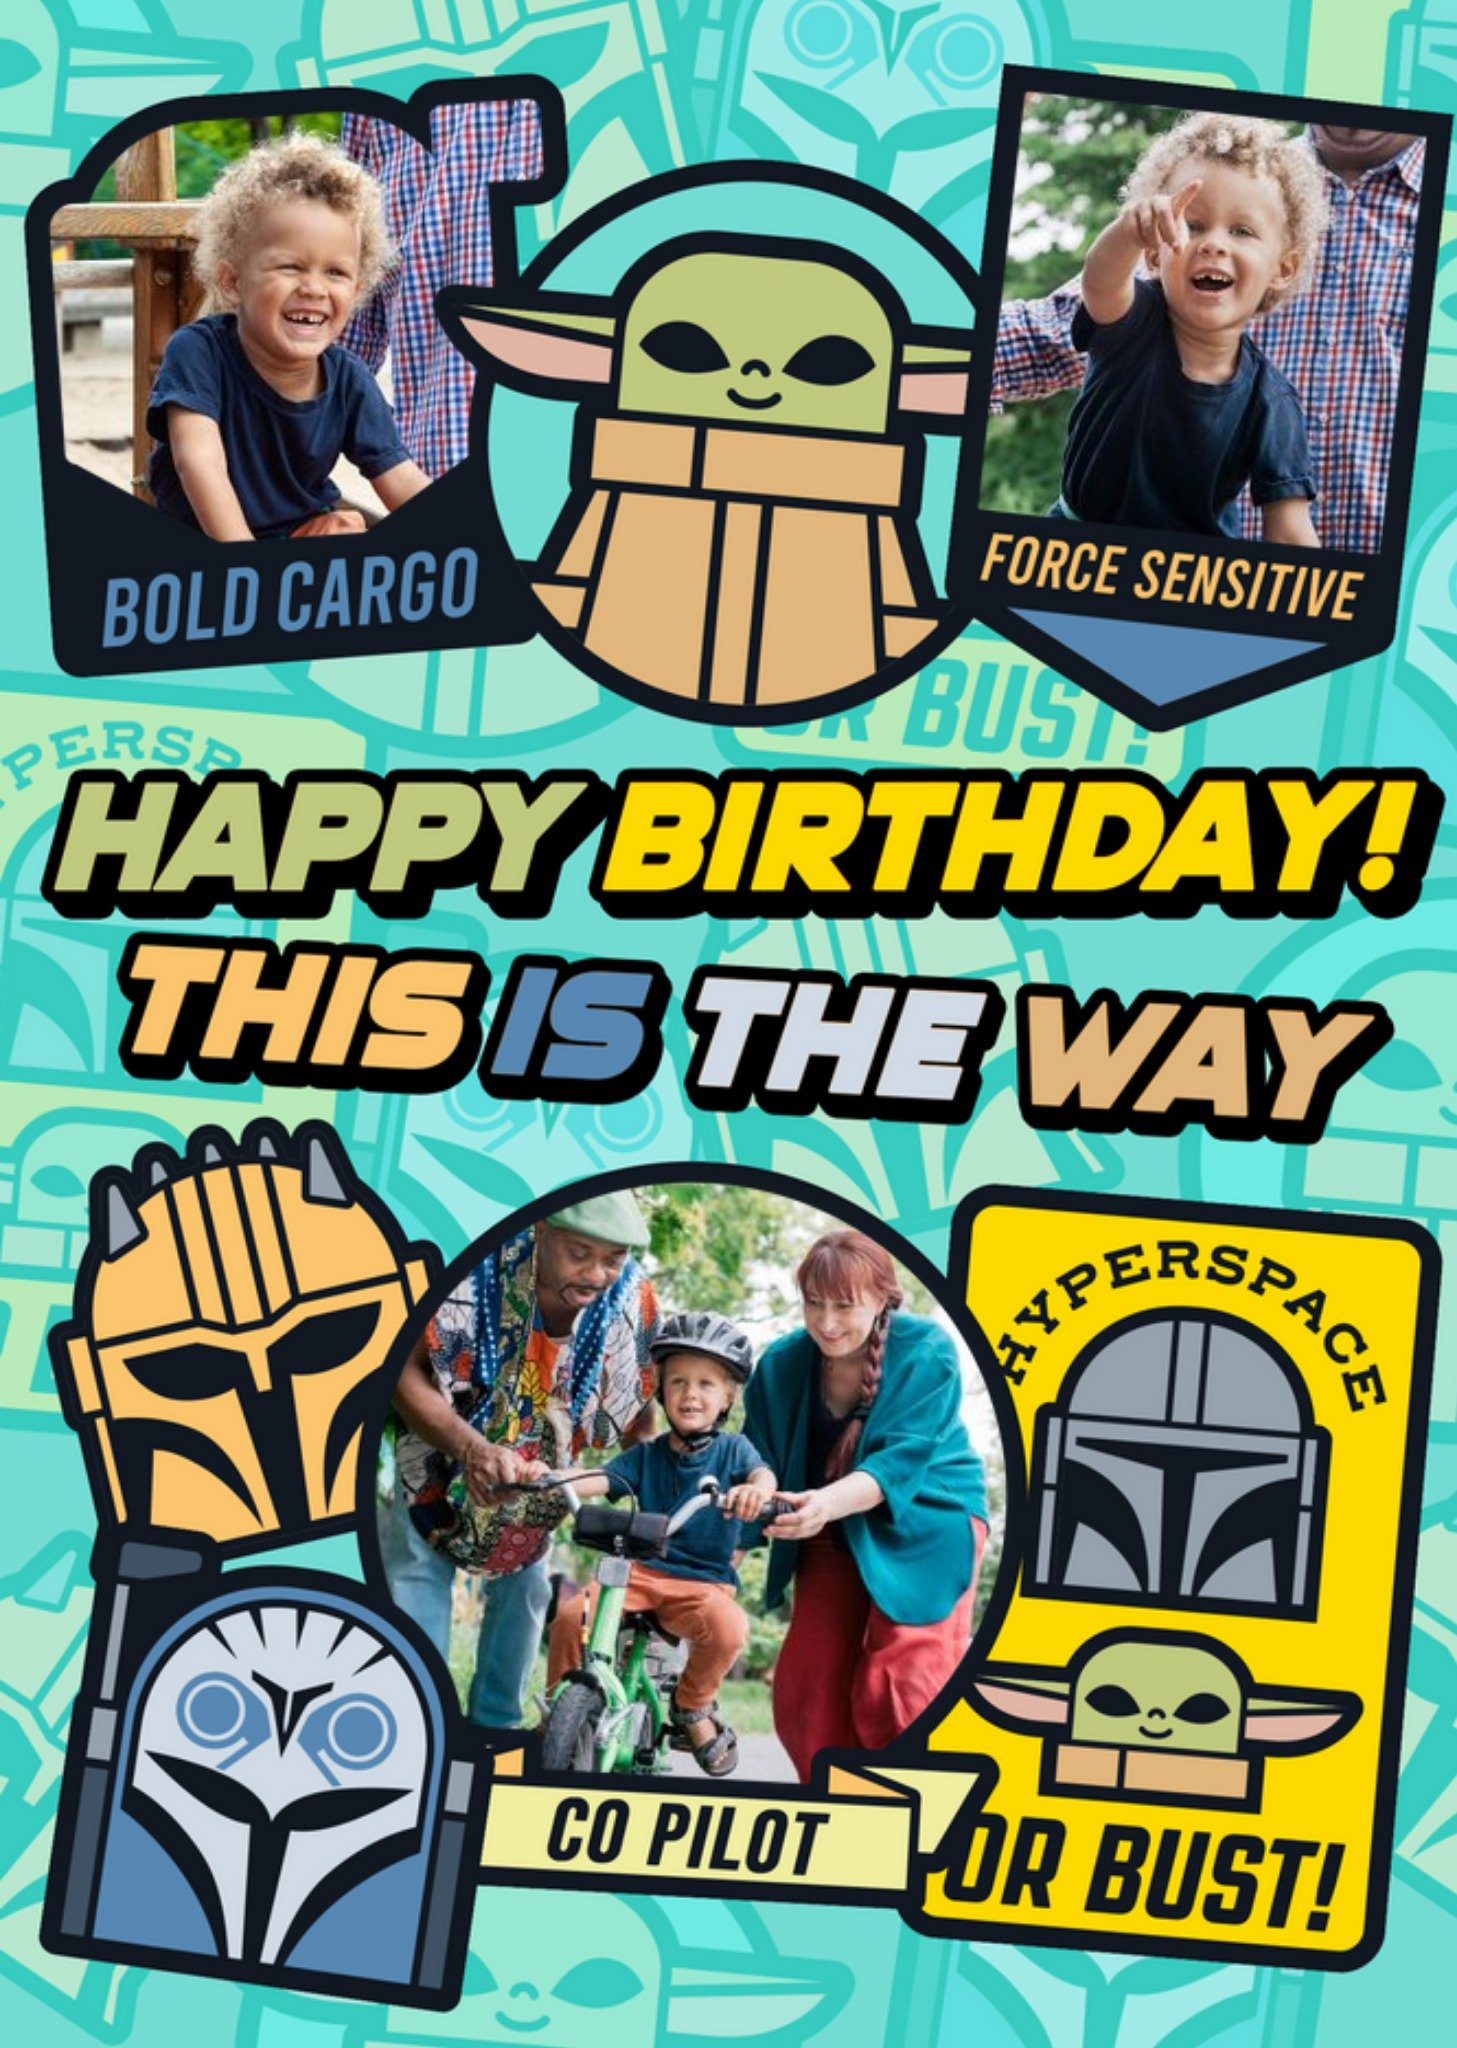 Star Wars The Mandalorian Fun Cartoon Multi Photo Upload Birthday Card, Large